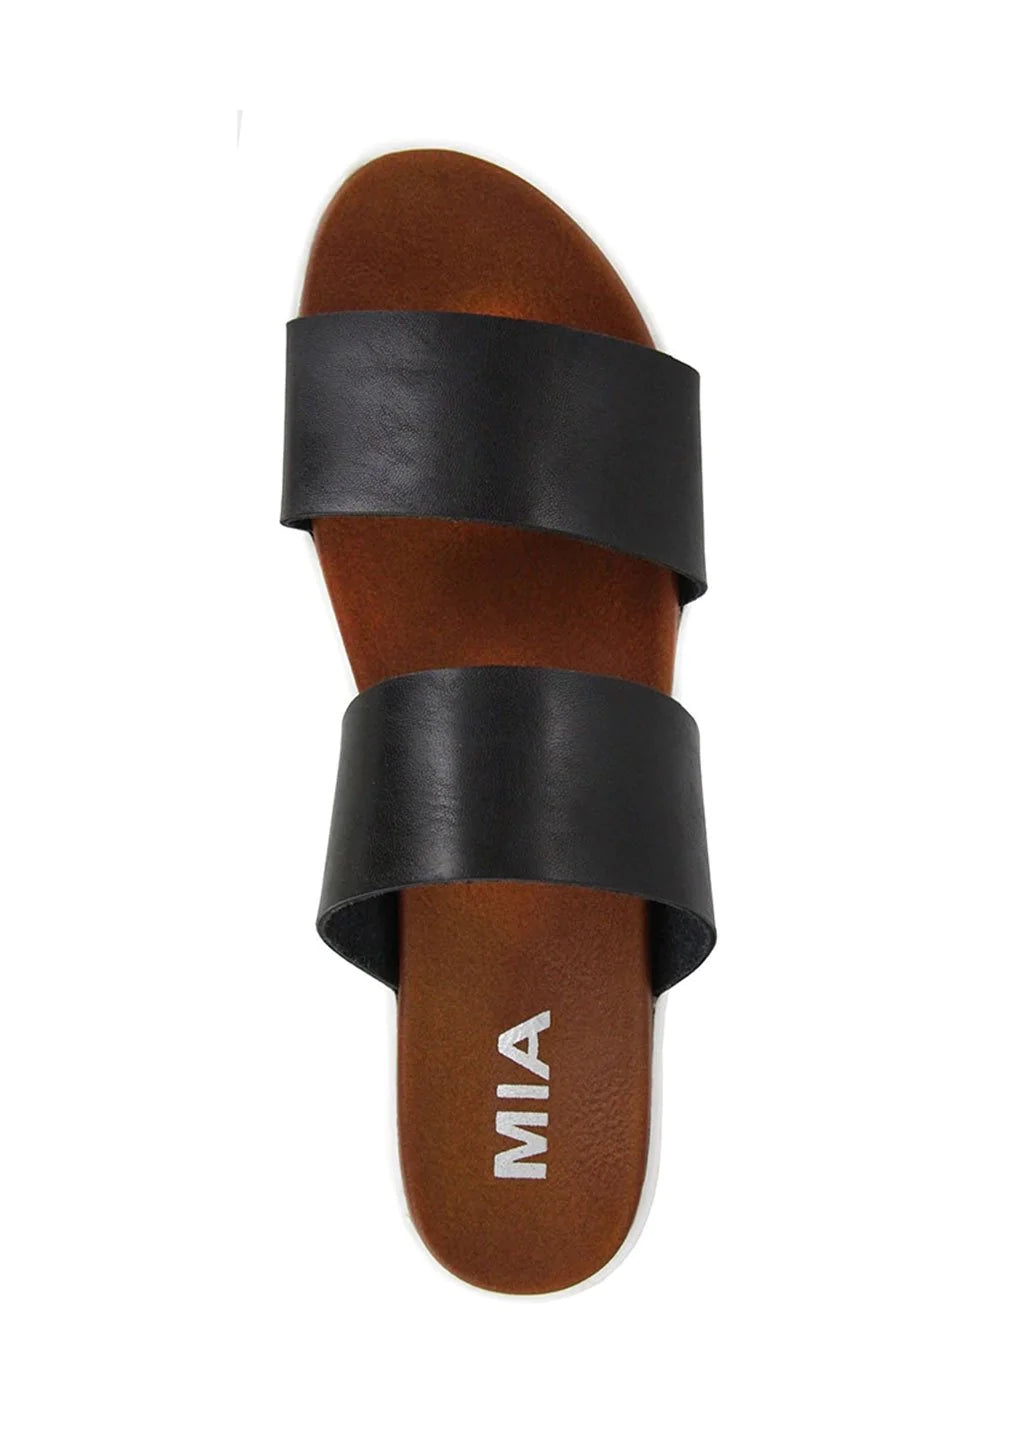 Mia Sage sandal